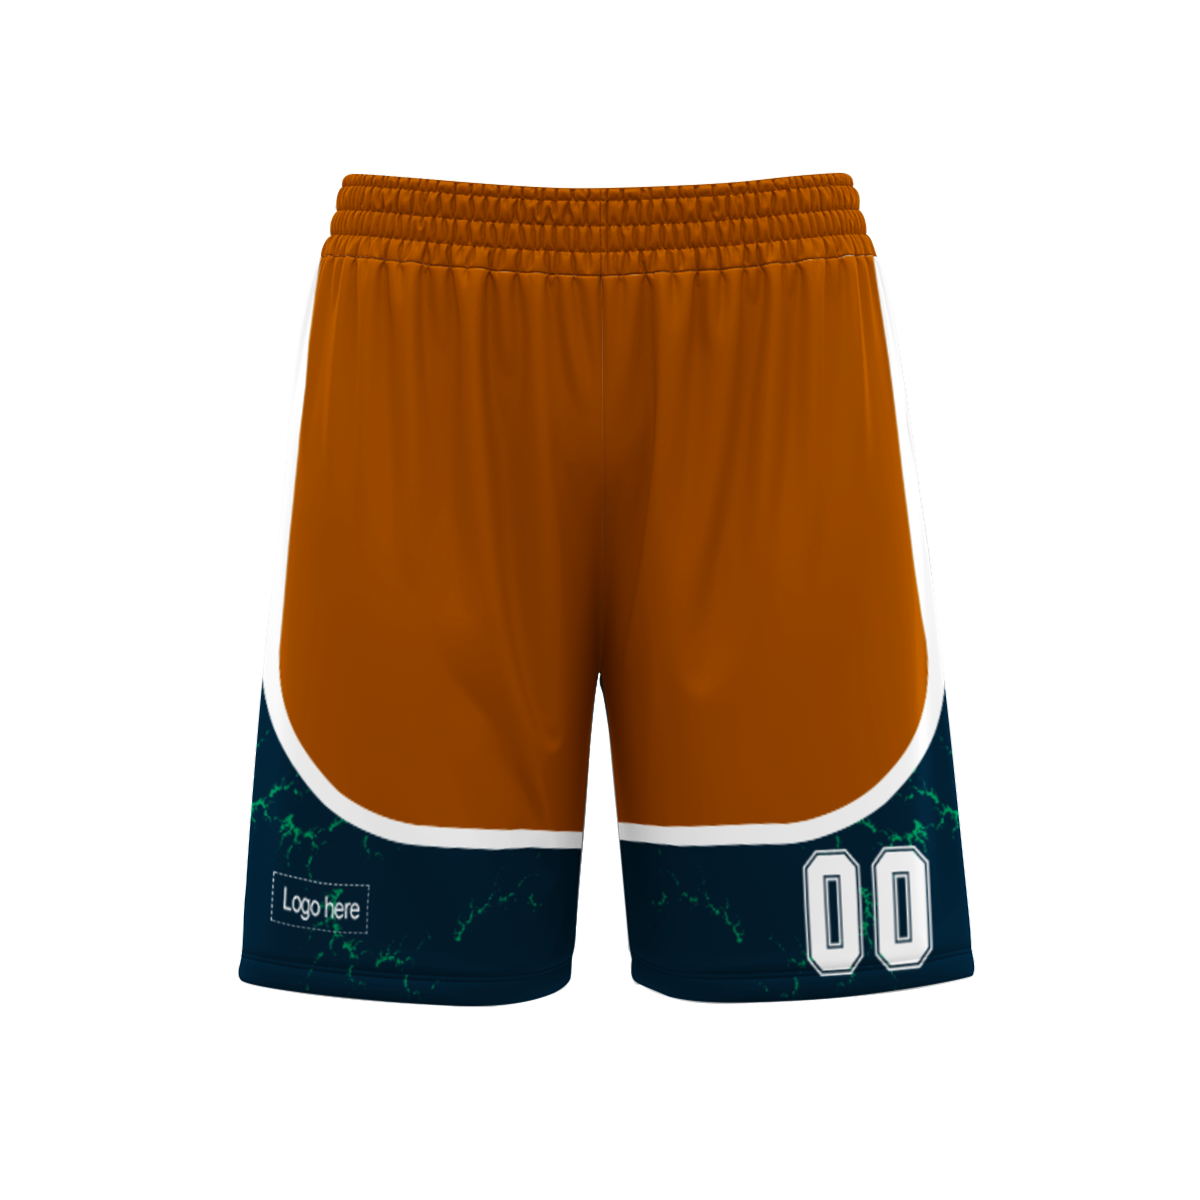 personalized-design-customized-basketball-wear-jersey-uniforms-print-on-demand-training-basketball-suits-at-cj-pod-7